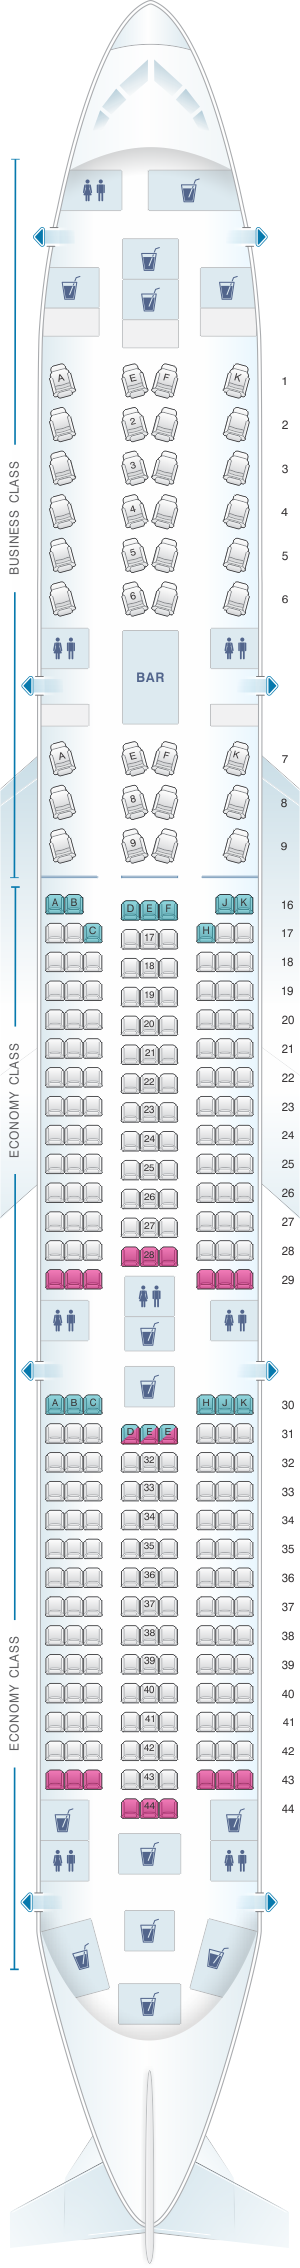 a350 900 seat map qatar        <h3 class=